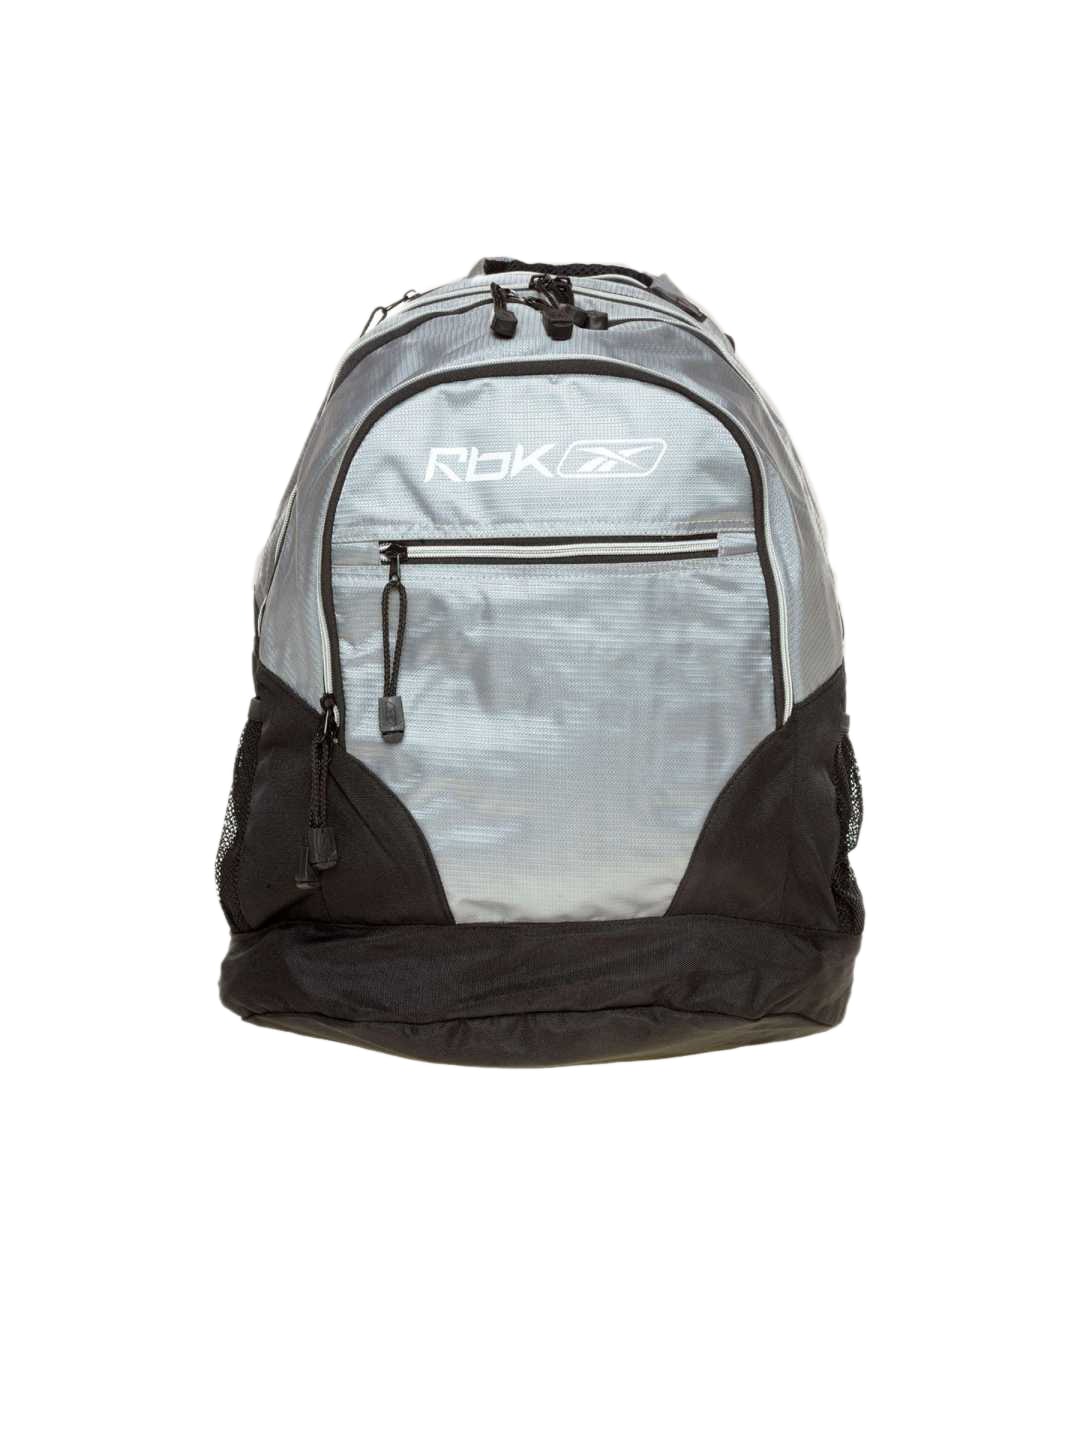 Reebok Silver-Black Laptop Backpack